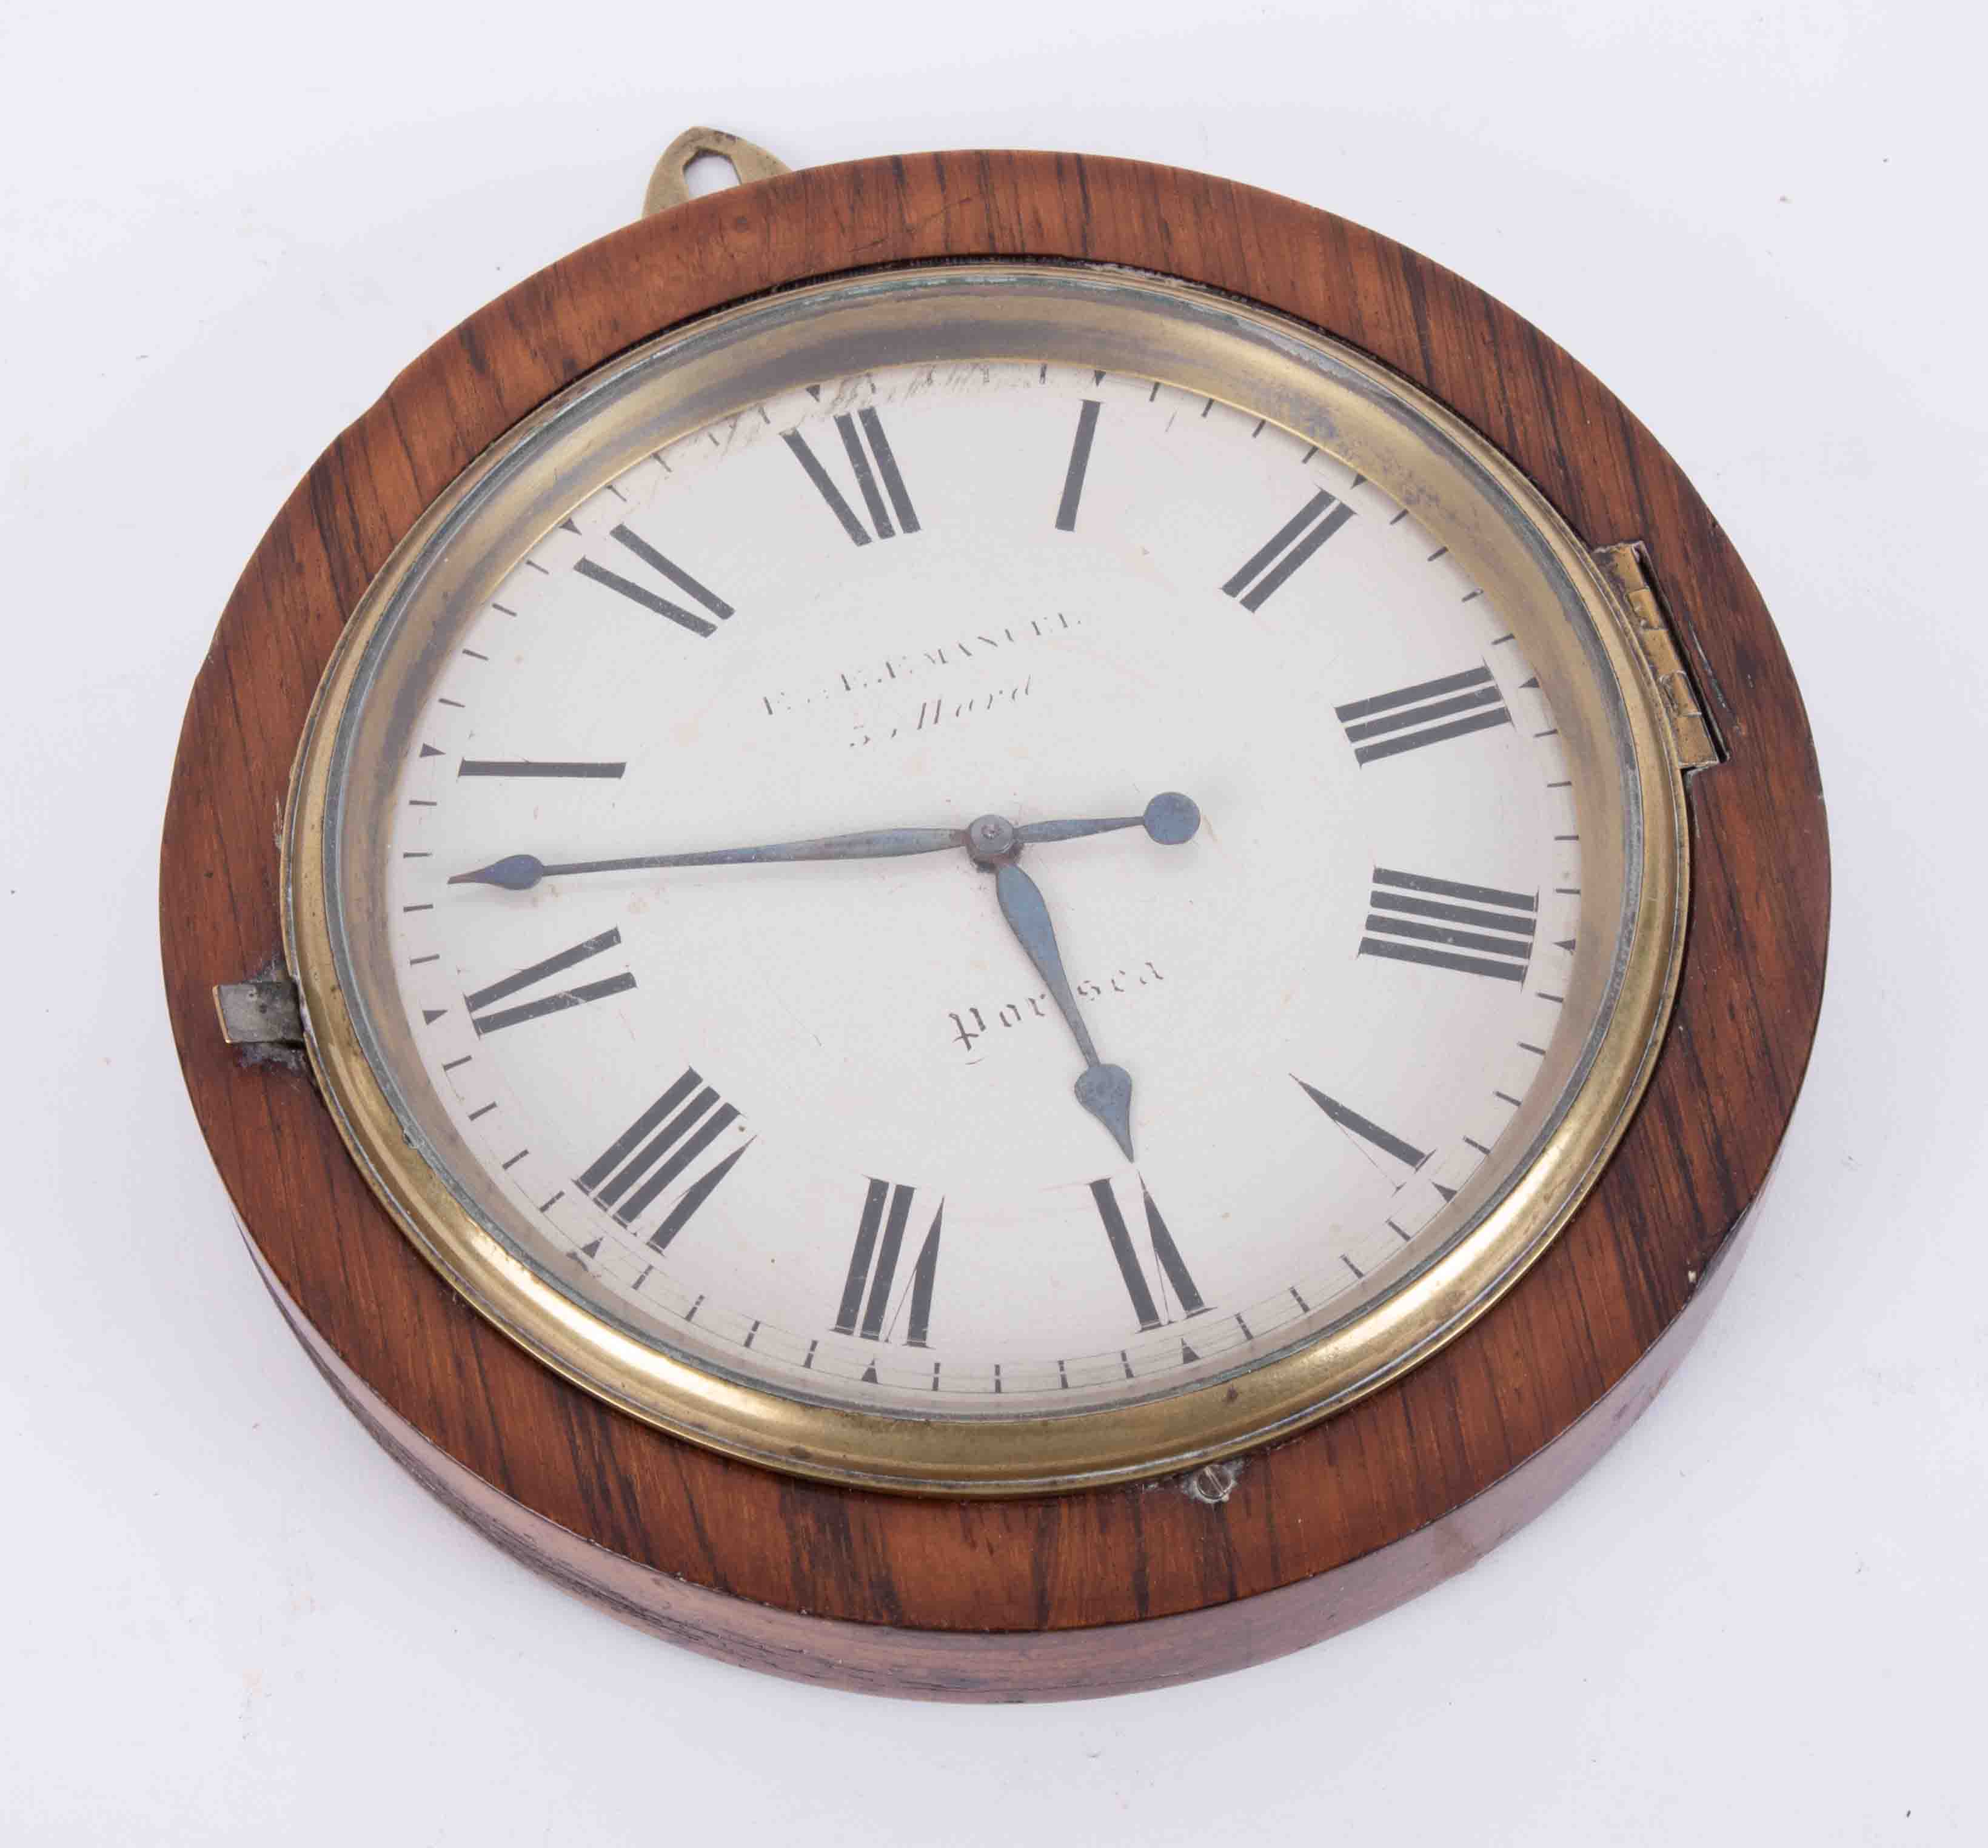 A 19th century rosewood framed circular wall clock, marked 'E. Emanuel, Portsea?' the pocket watch